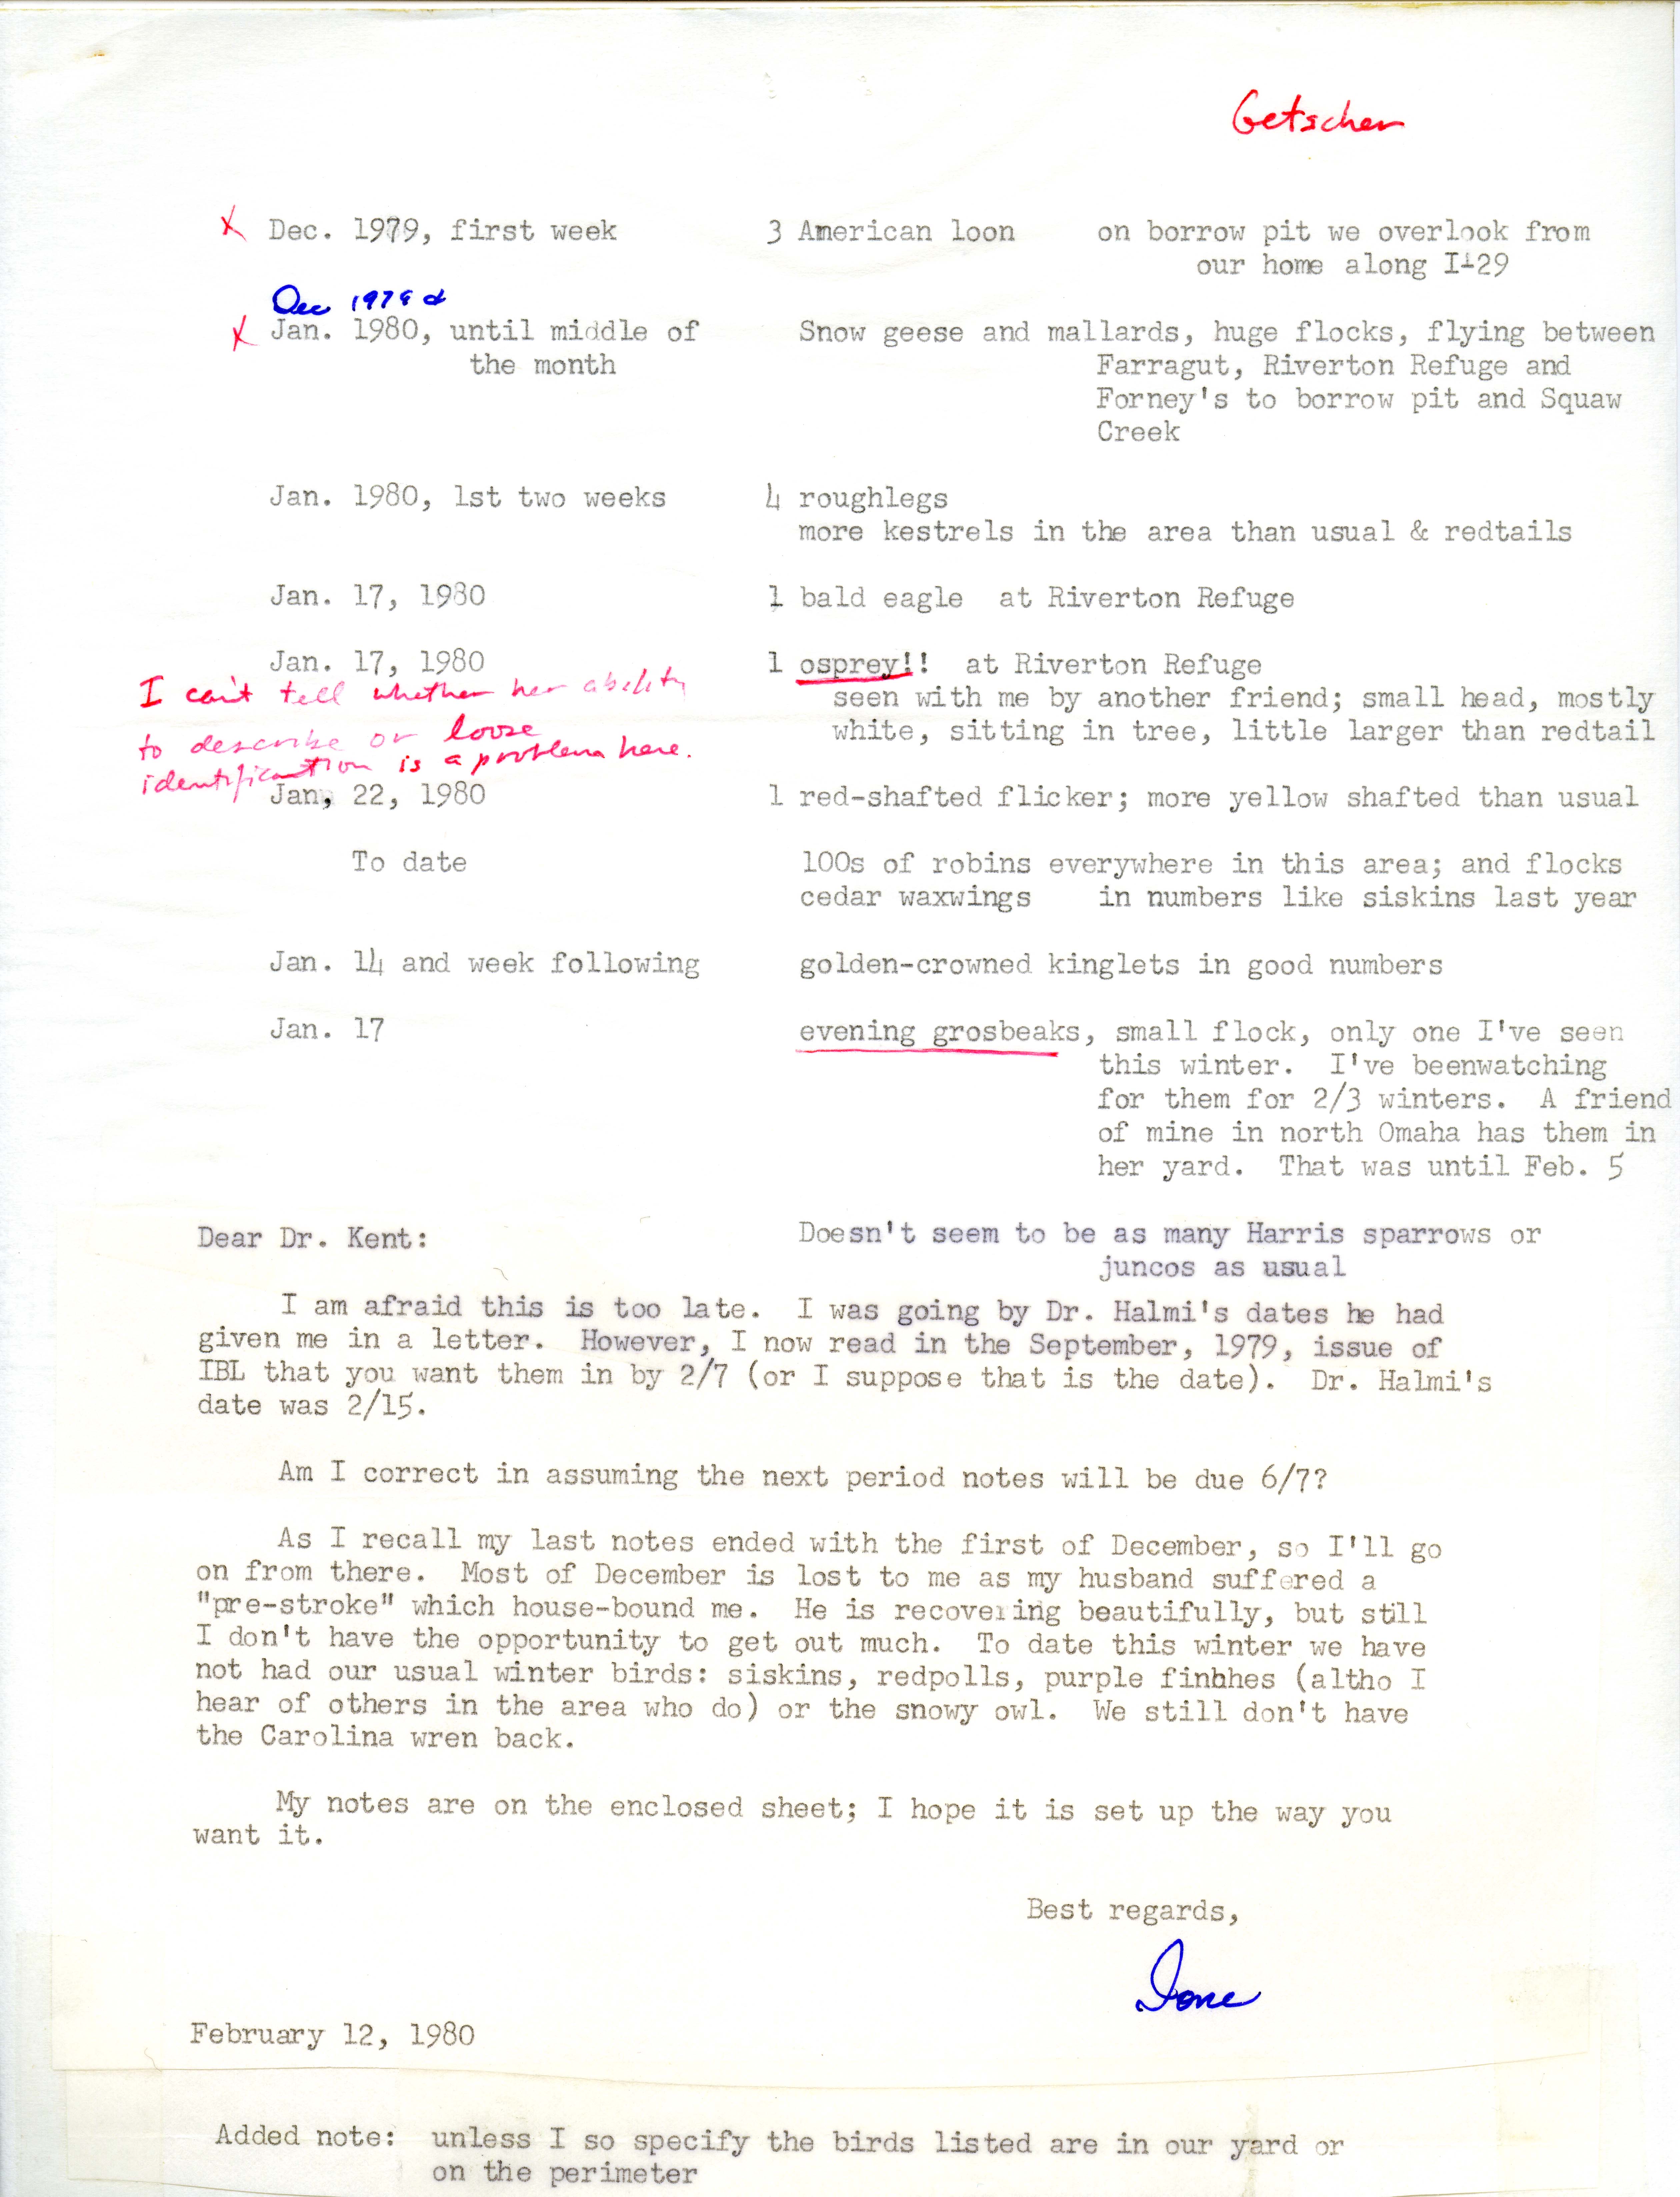 Ione Getscher letter to Thomas H. Kent regarding bird sightings, February 12, 1980